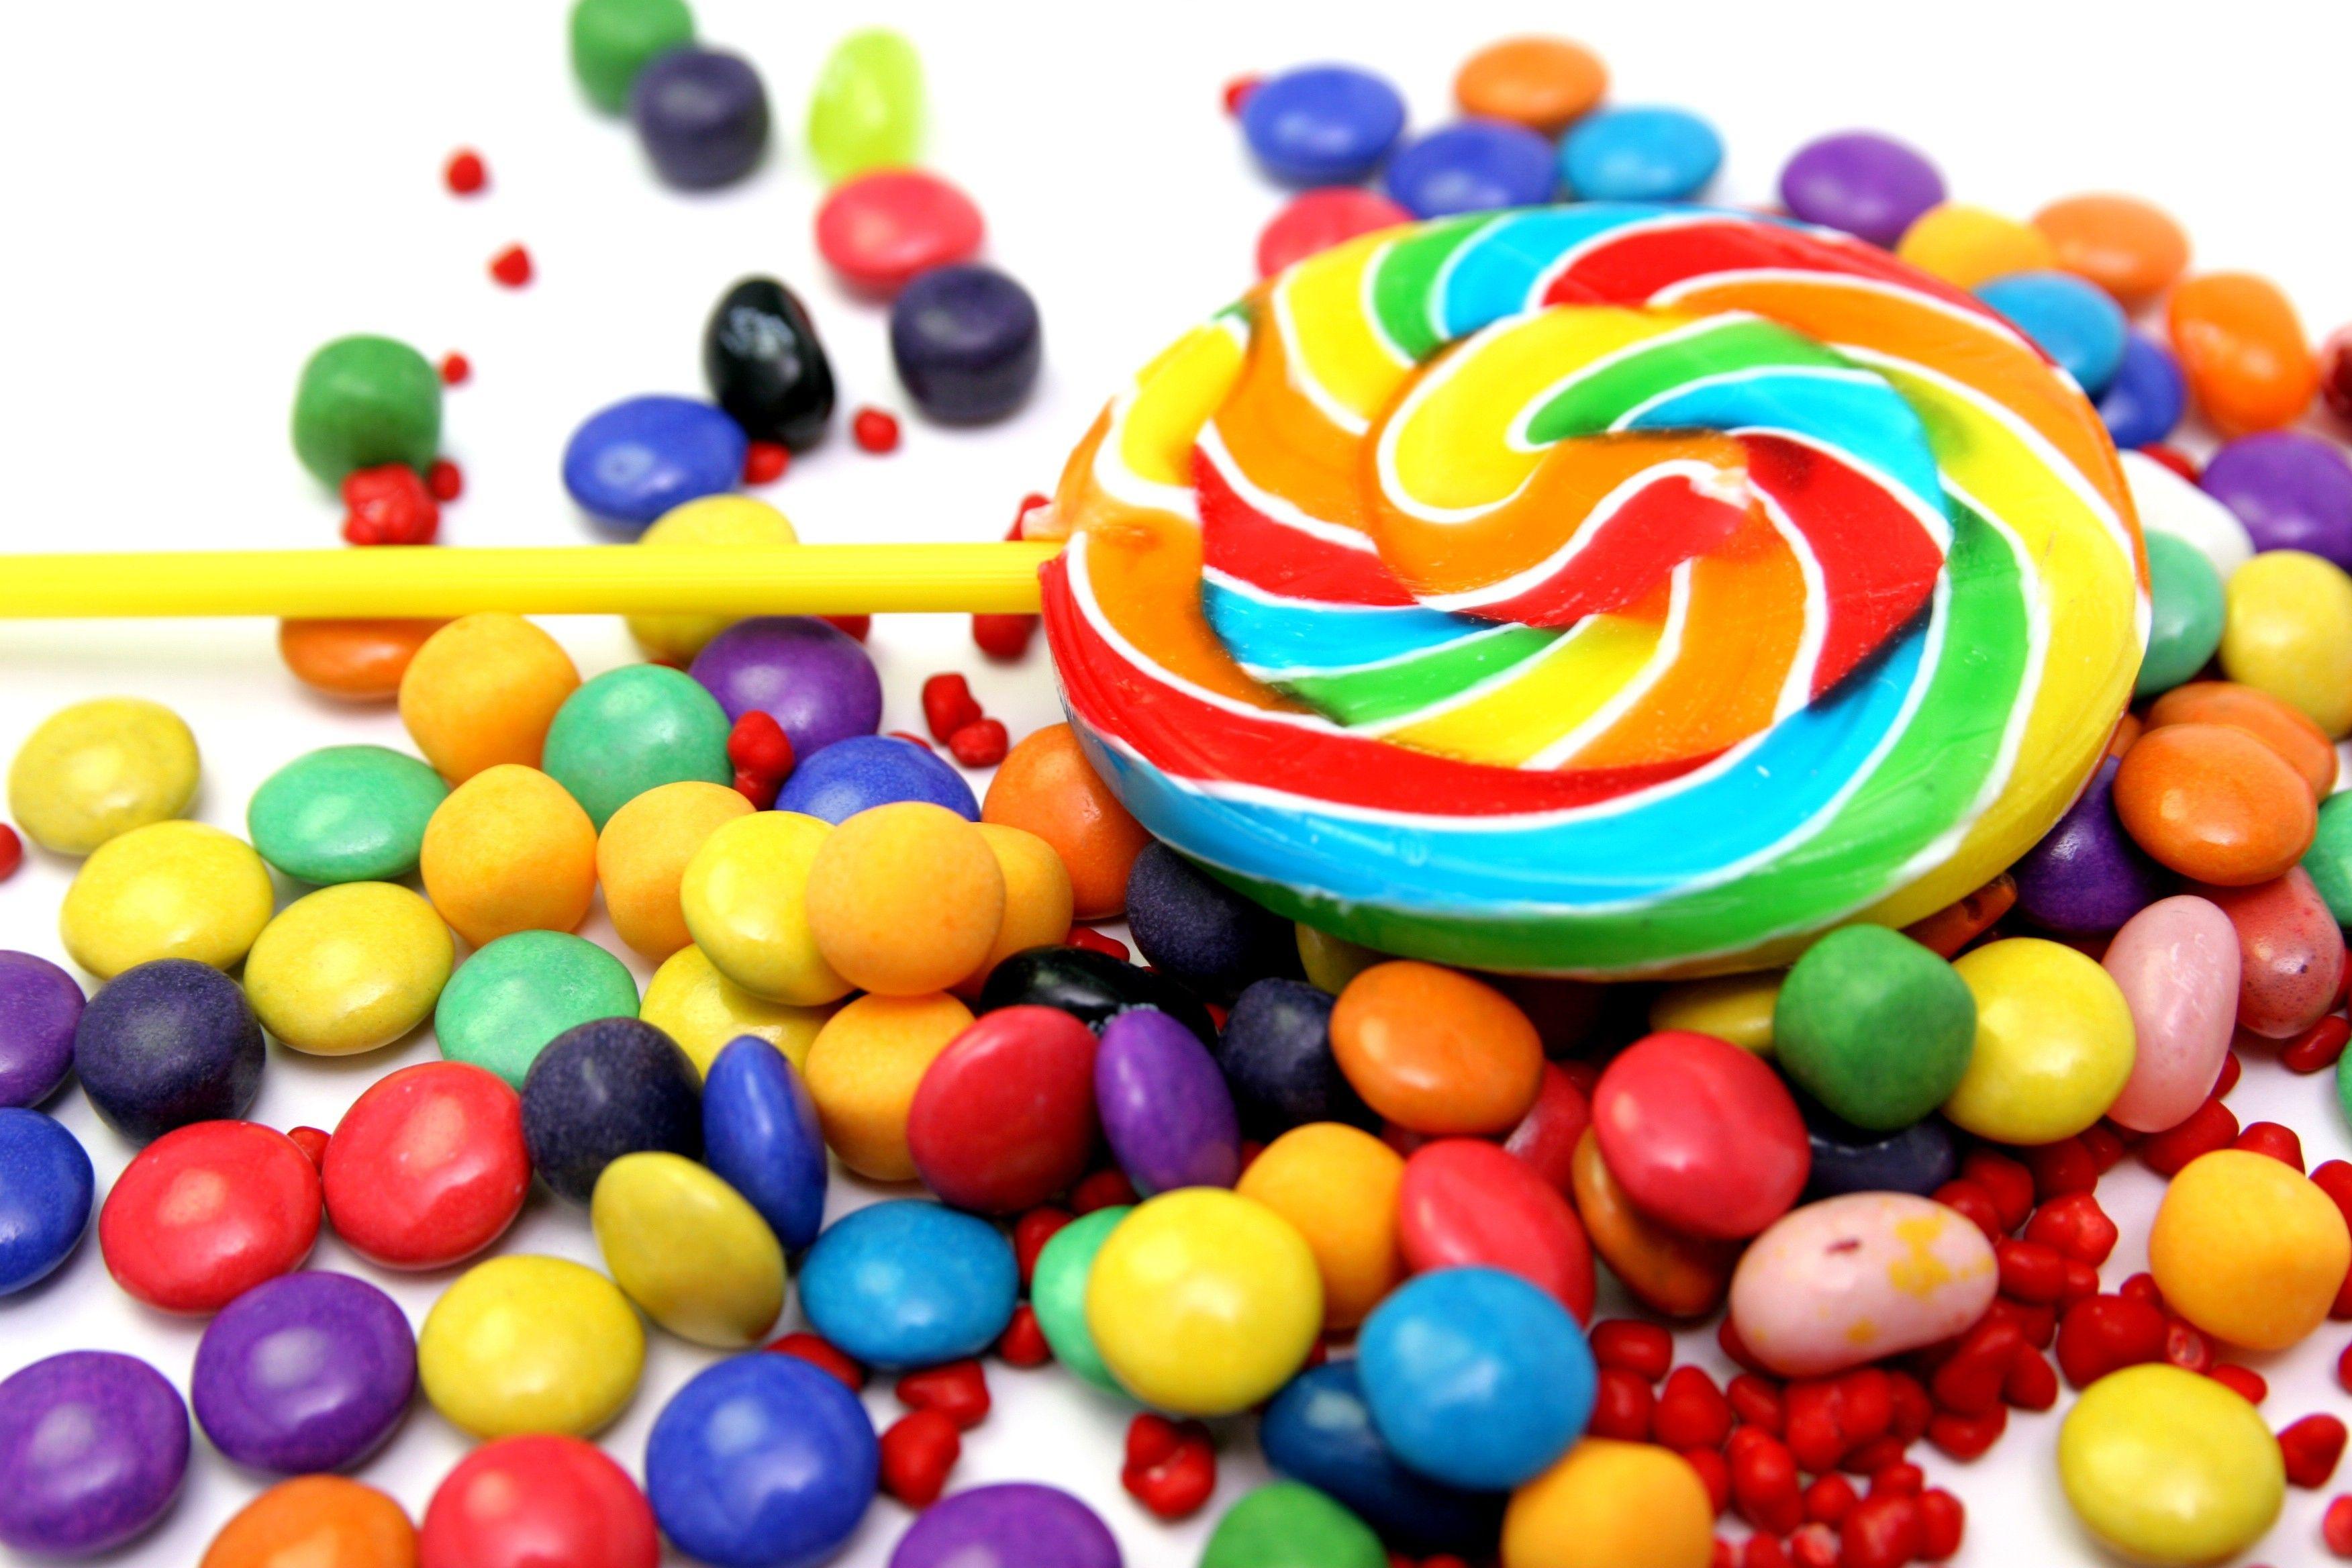 Sugar sweets candies wallpaper. PC